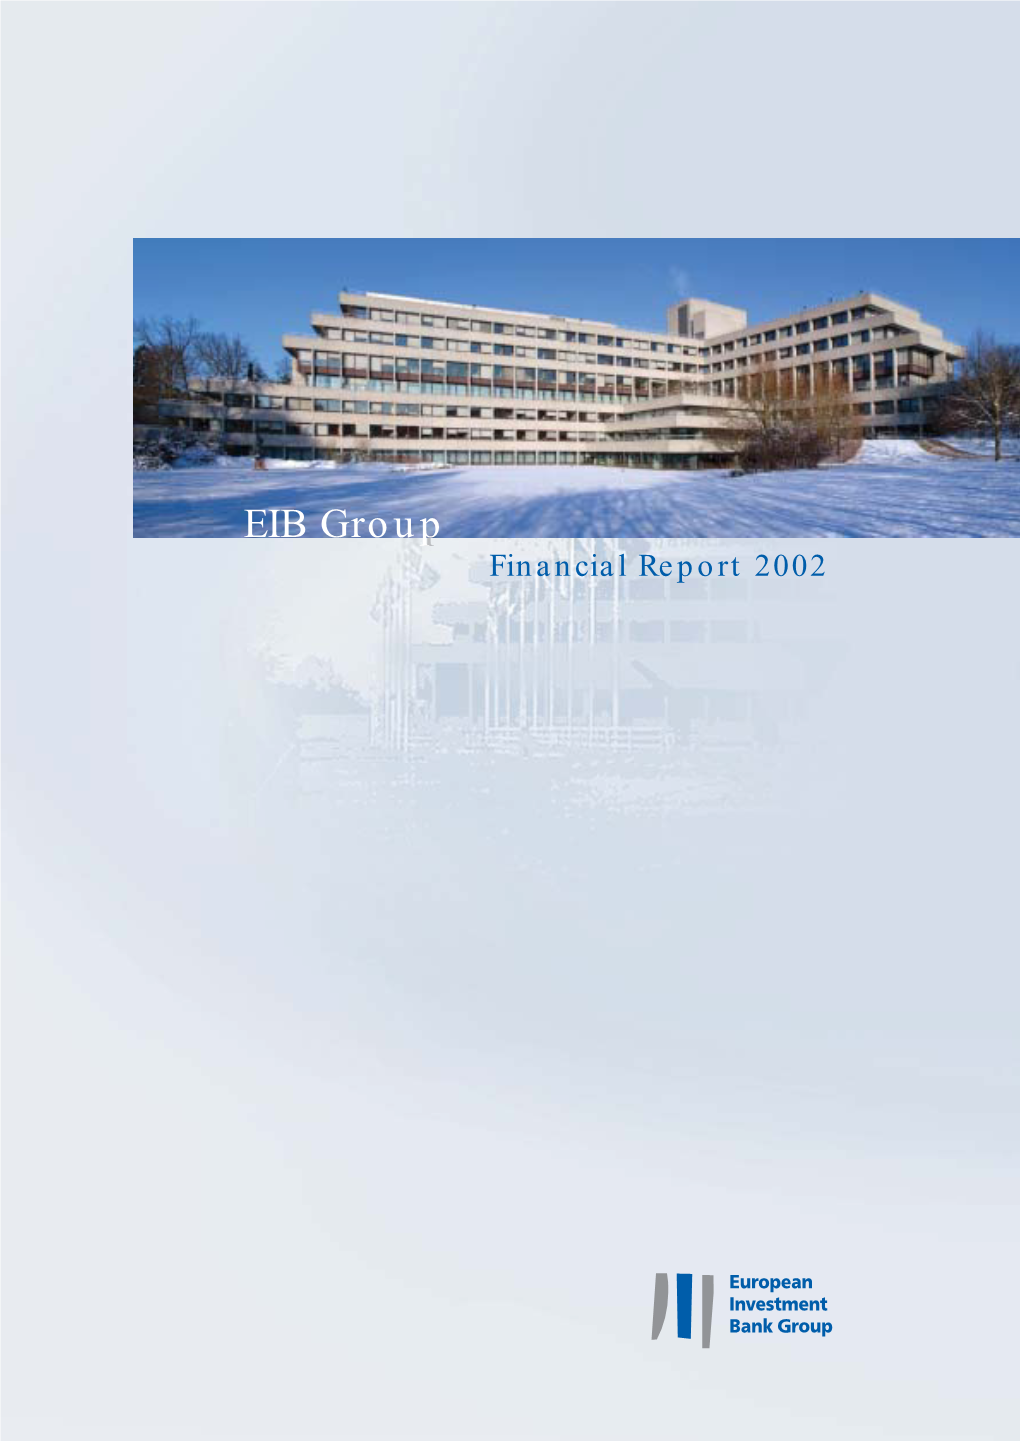 Financial Report 2002 EIB Group: Key Data